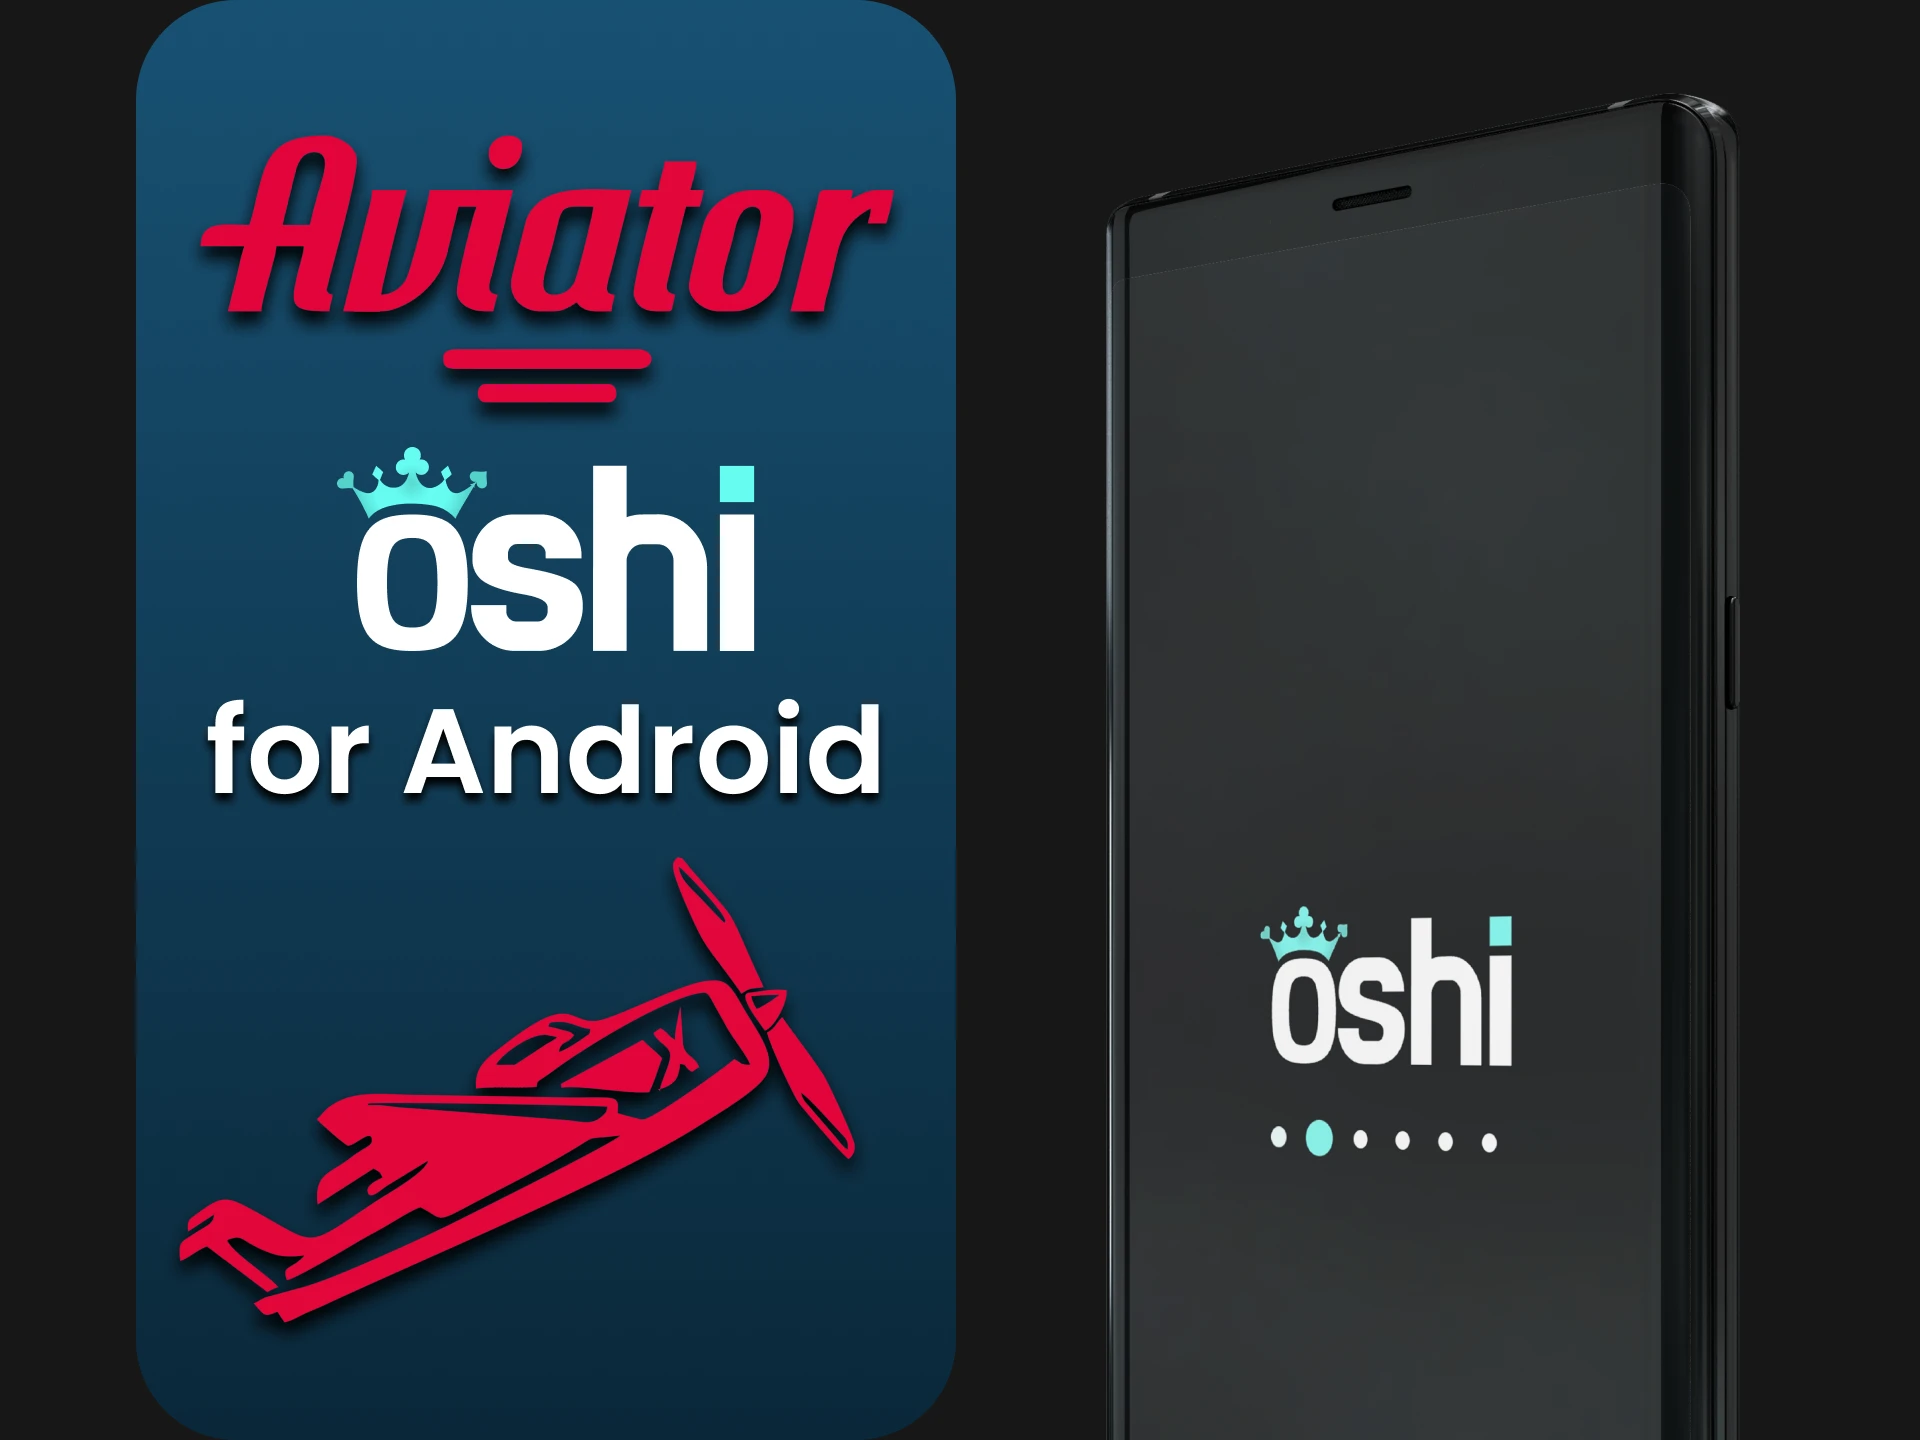 Install the Oshi Casino app to play Aviator on Android.